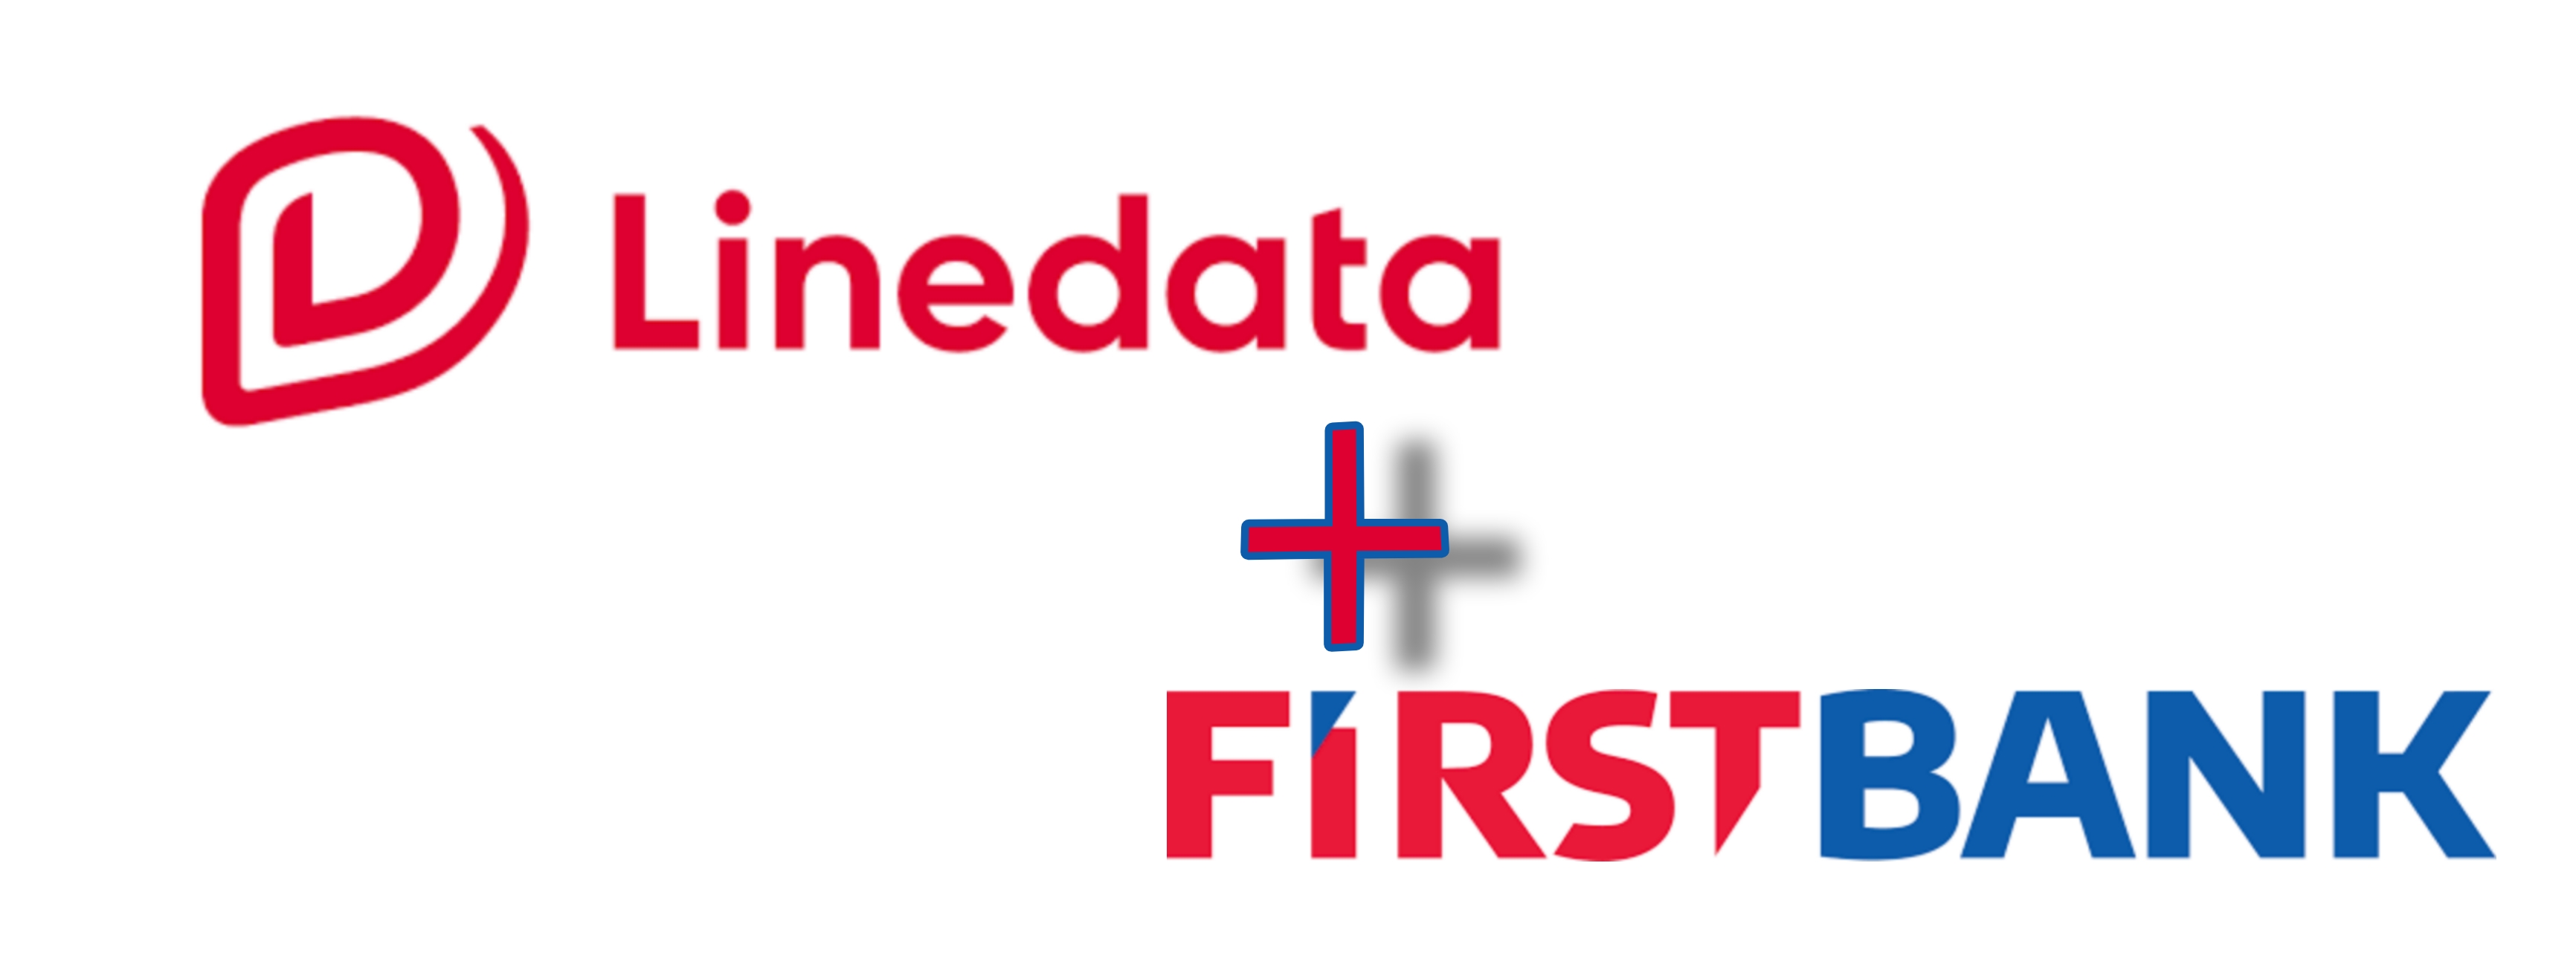 Linedata and First Bank Partnership Unlocks New Efficiencies